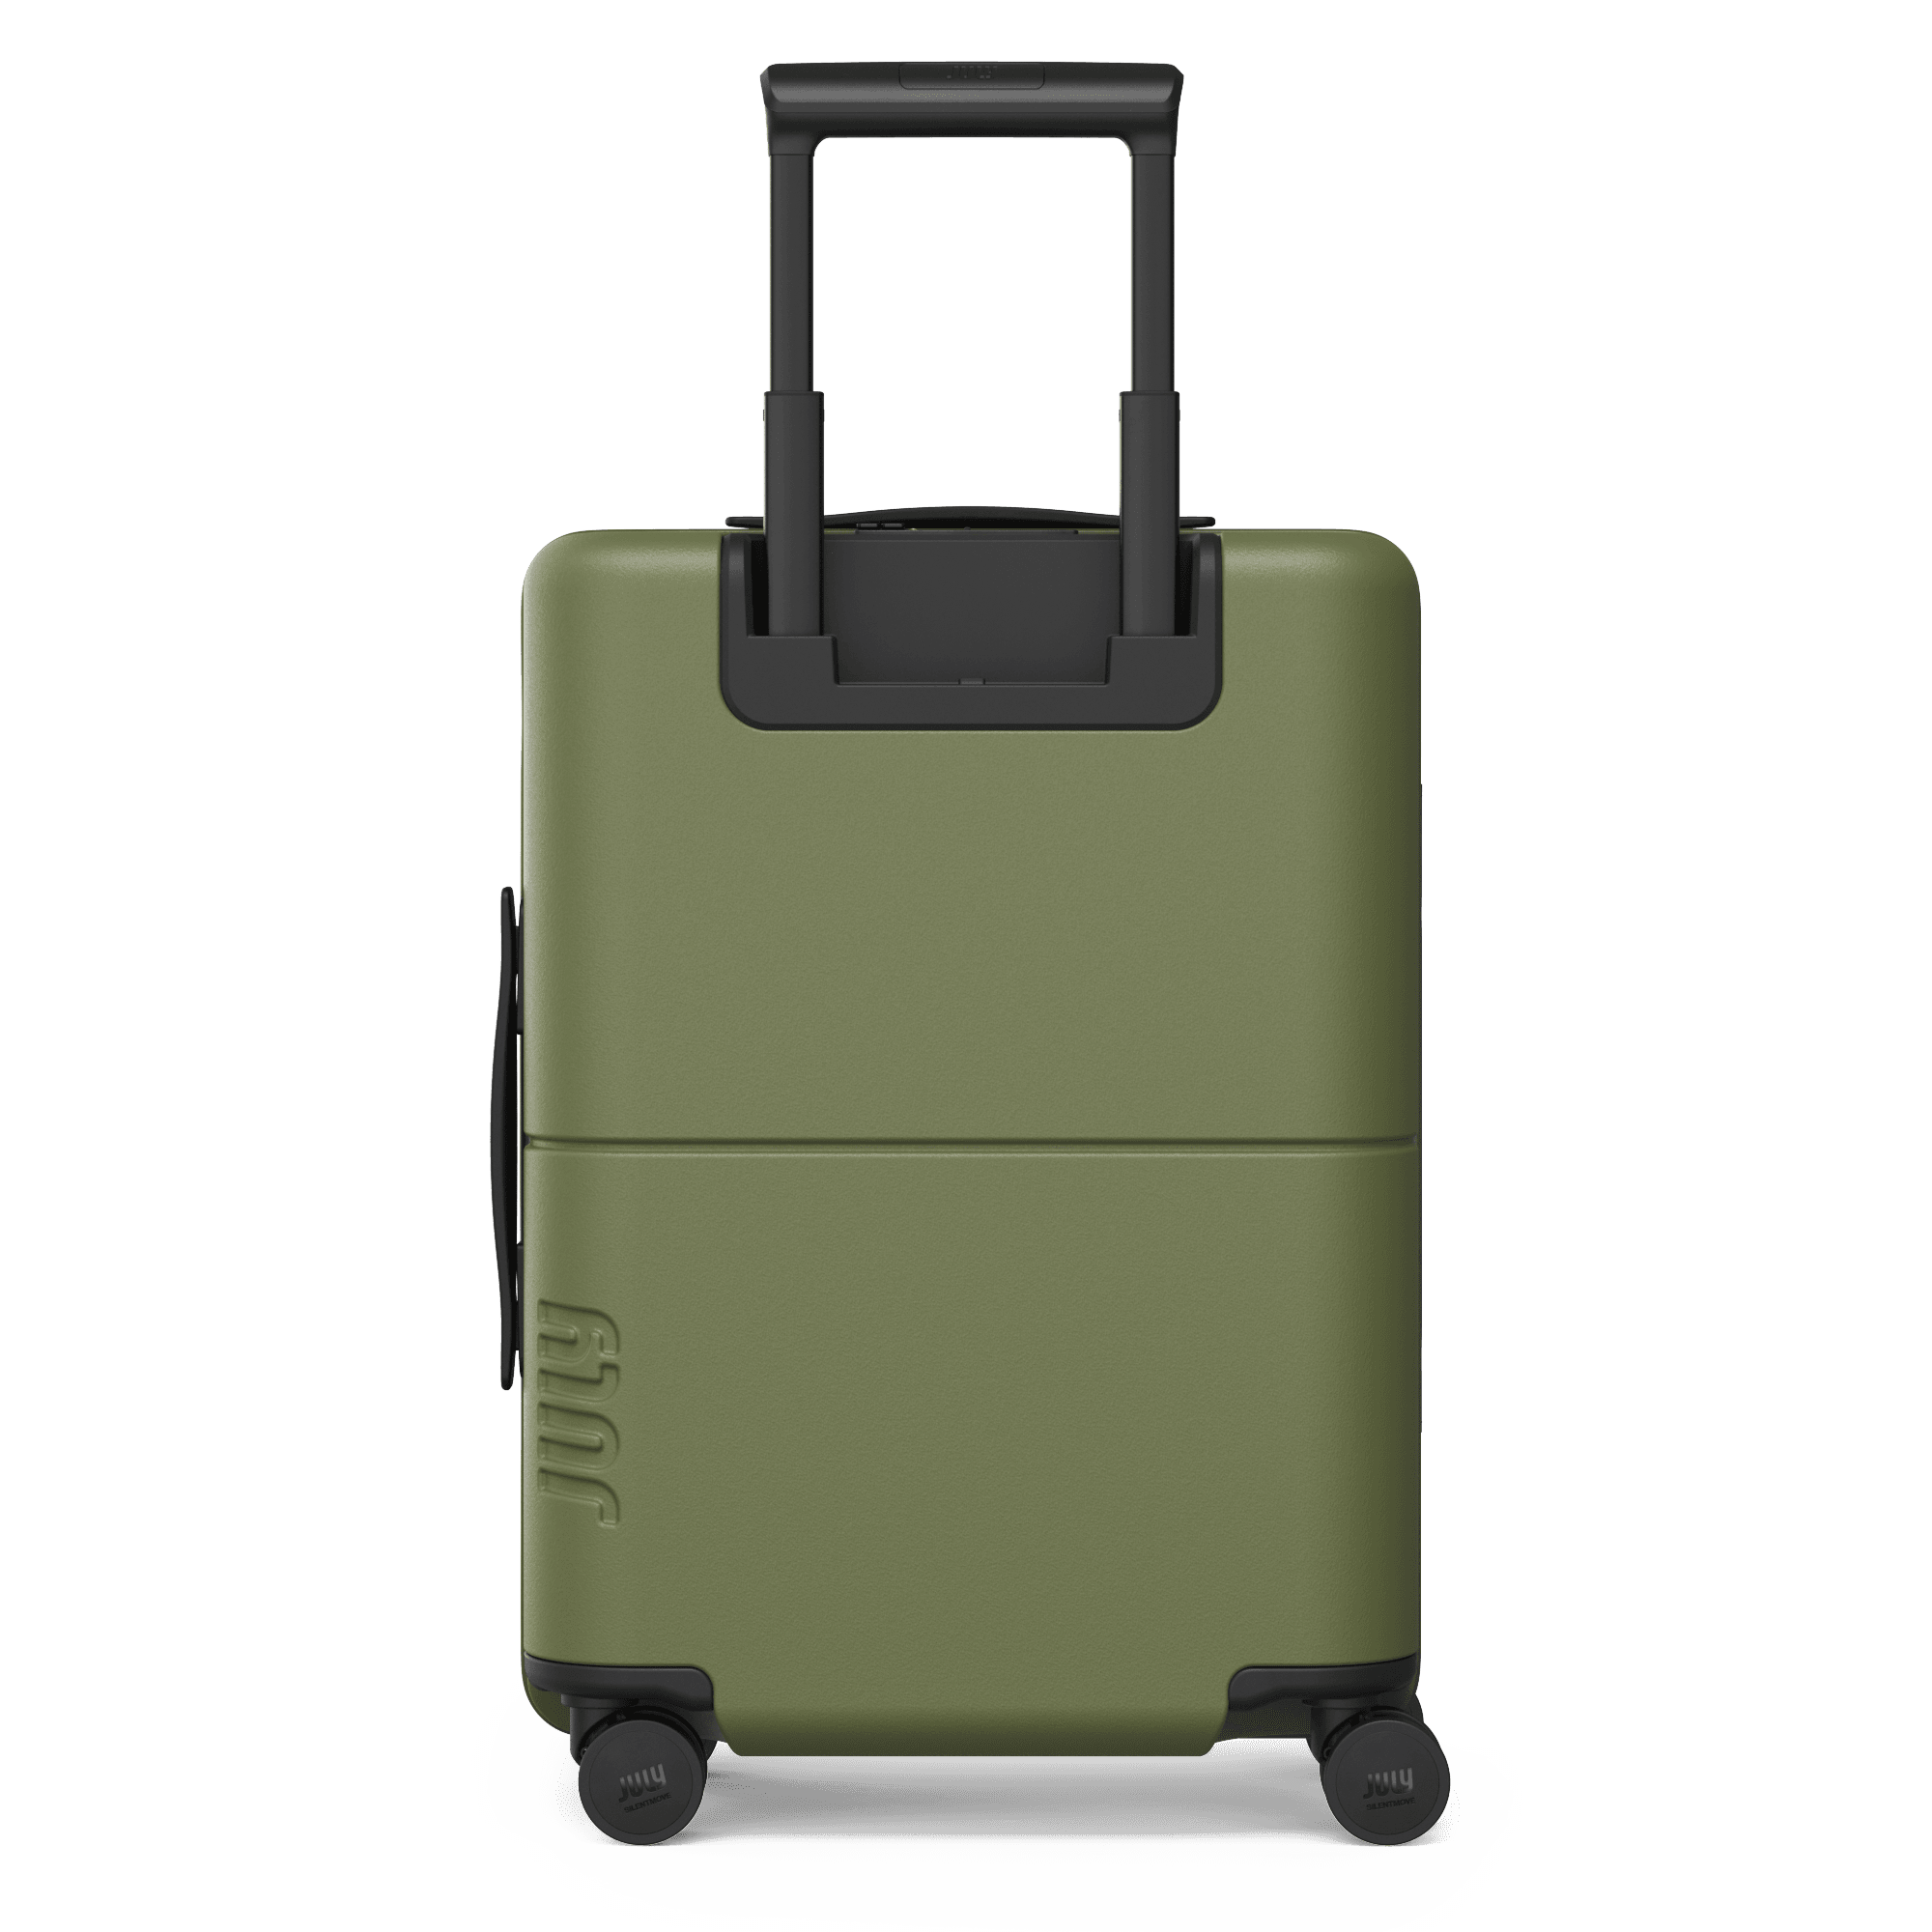 SteamLine Luggage The Entrepreneur Large Hatbox in Lip Print